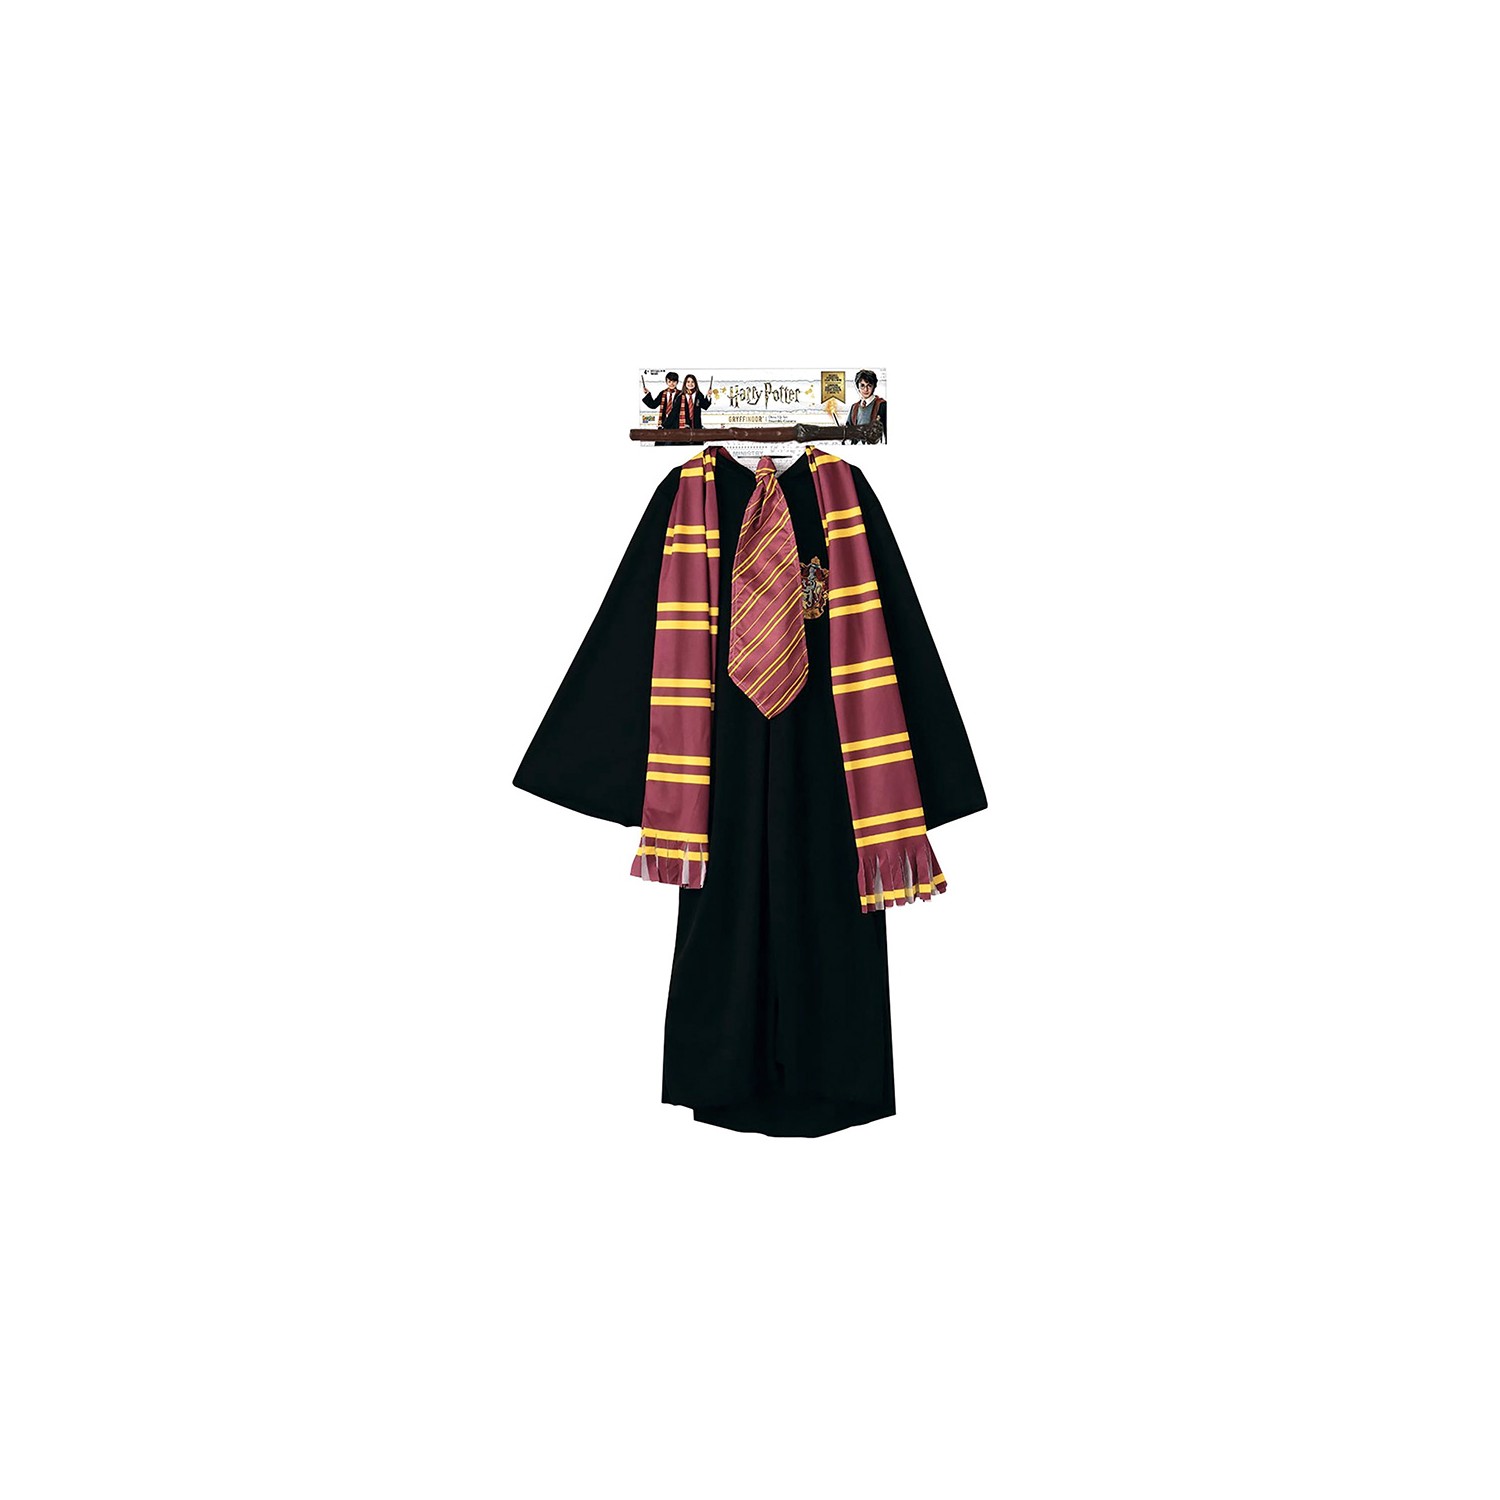 Kit déguisement Harry Potter Gryffondor - Fiesta Republic